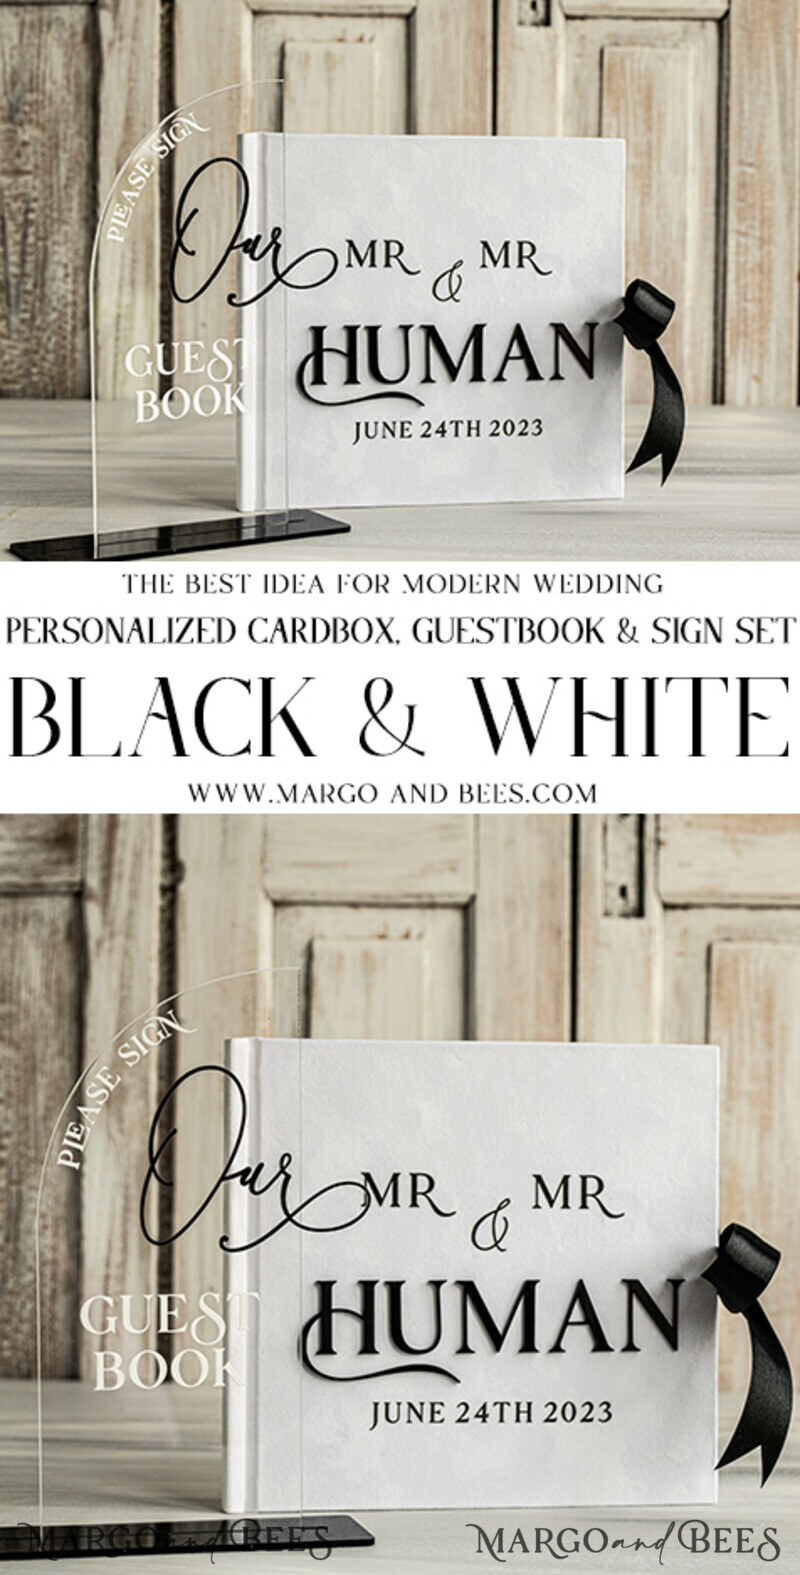 Velvet Set Card Box Guestbook & Sign, Wedding Card Box Instant Instax Guestbook, Black & White Wedding Money Box Sing Guestbook Set, BWs-20